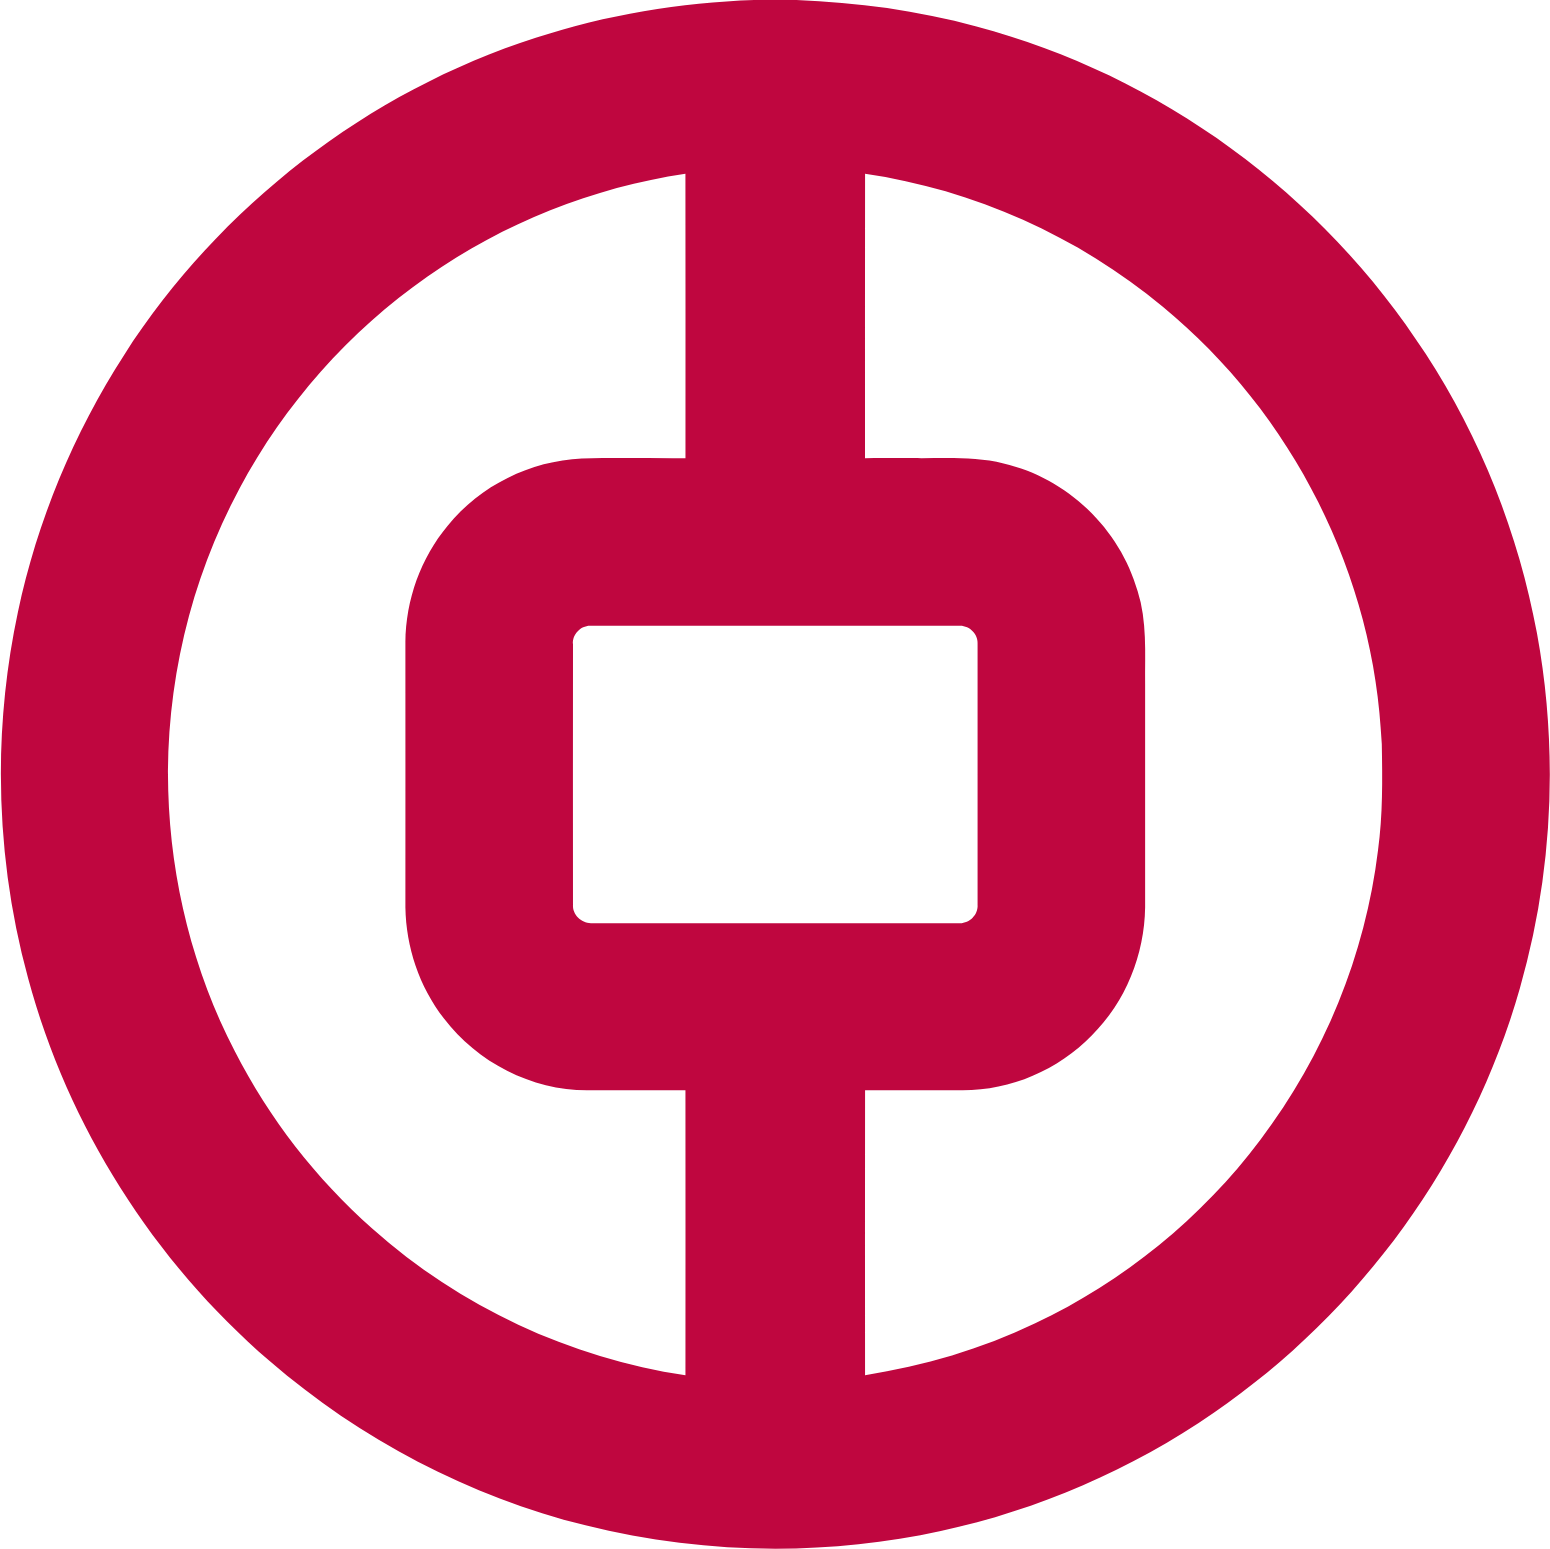 China Construction Bank Logo Im Transparenten Png Und